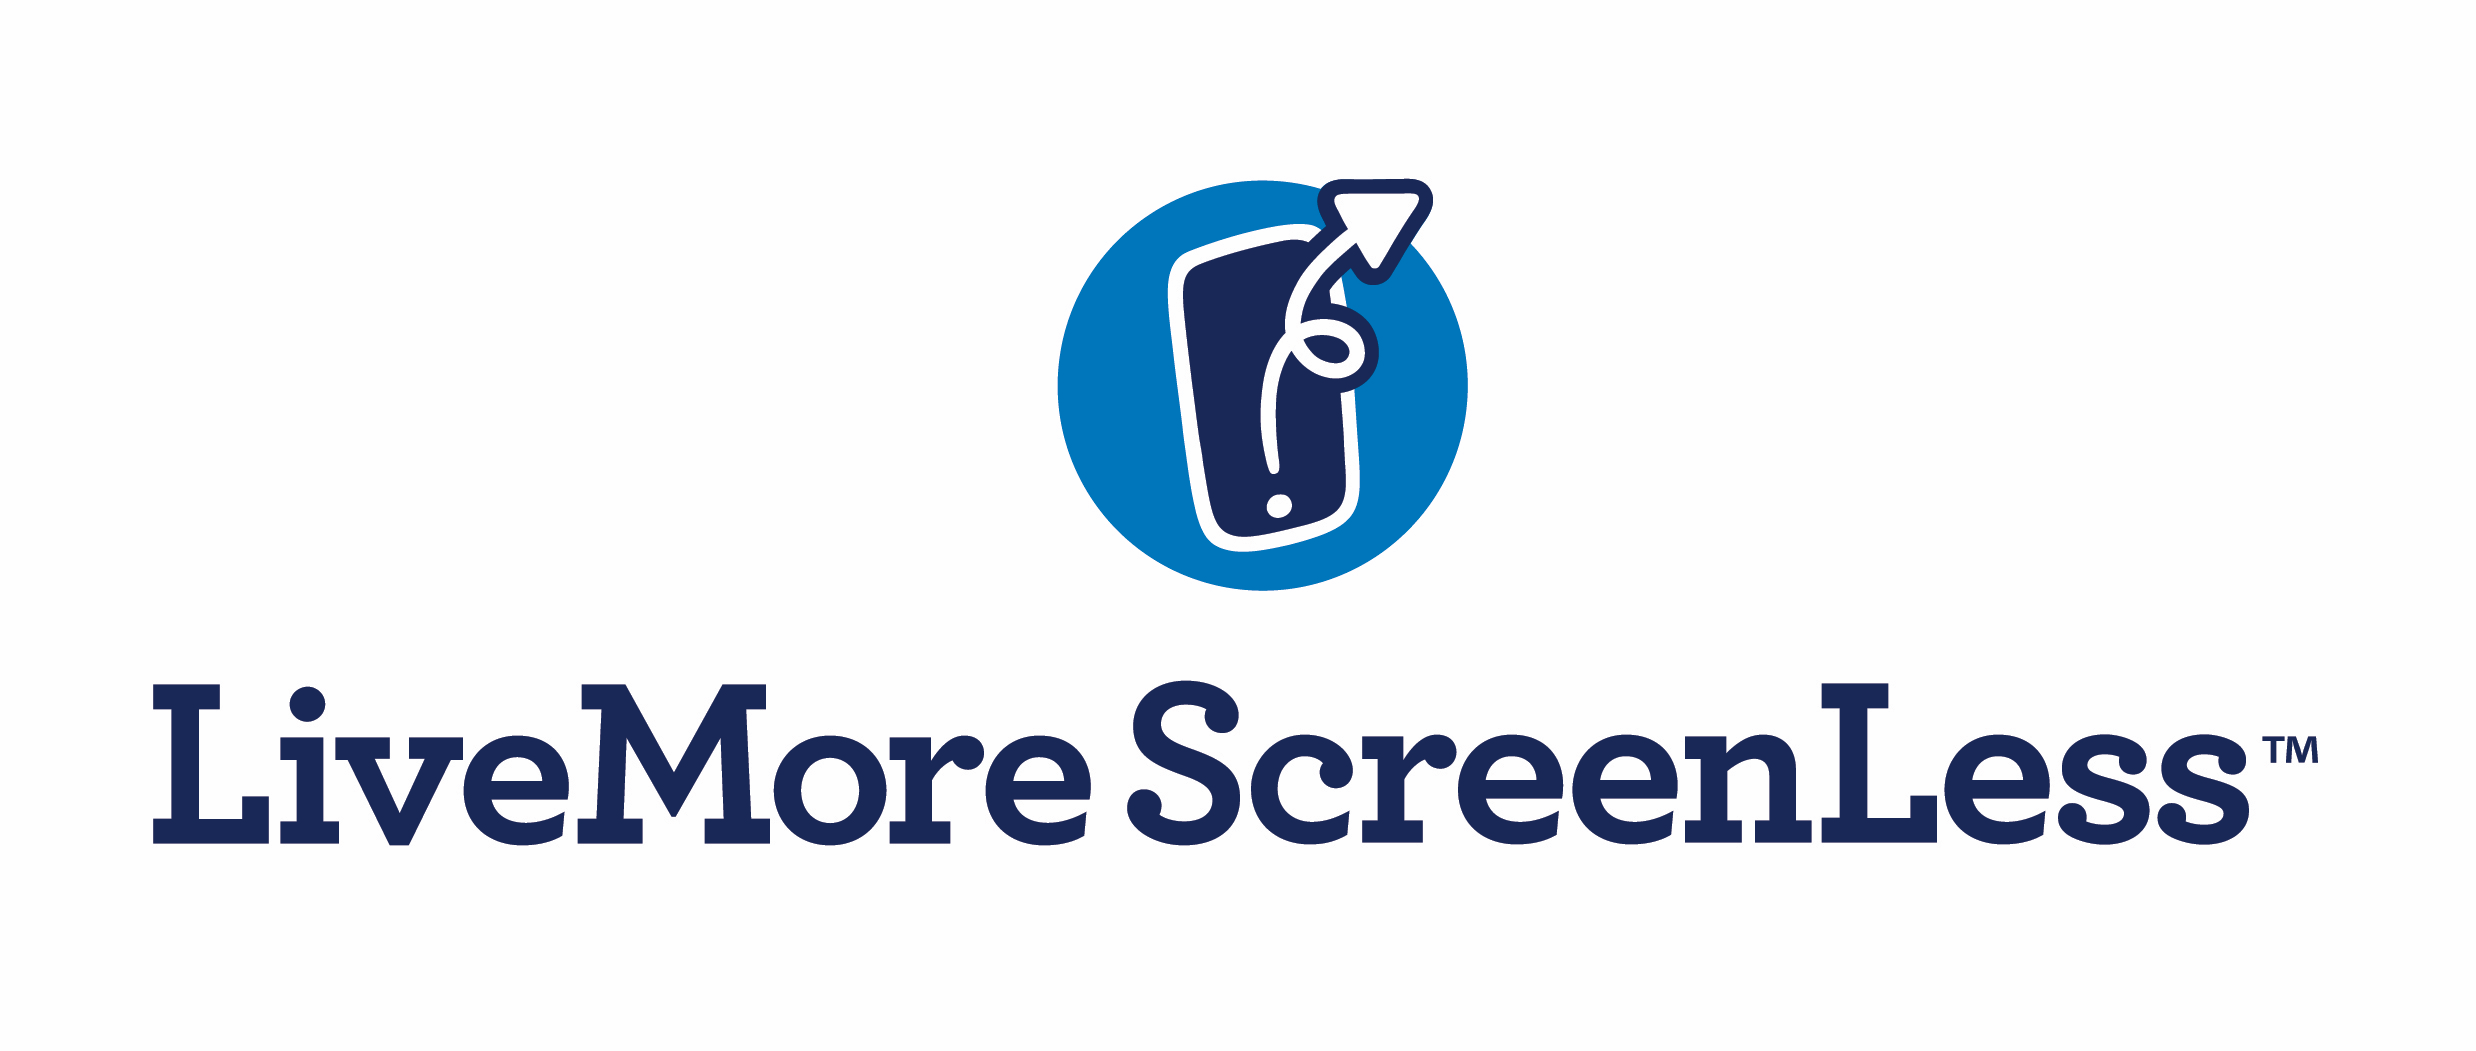 LiveMoreScreenLess_HorizontalLogo_Centered_BlueOnBlue.png